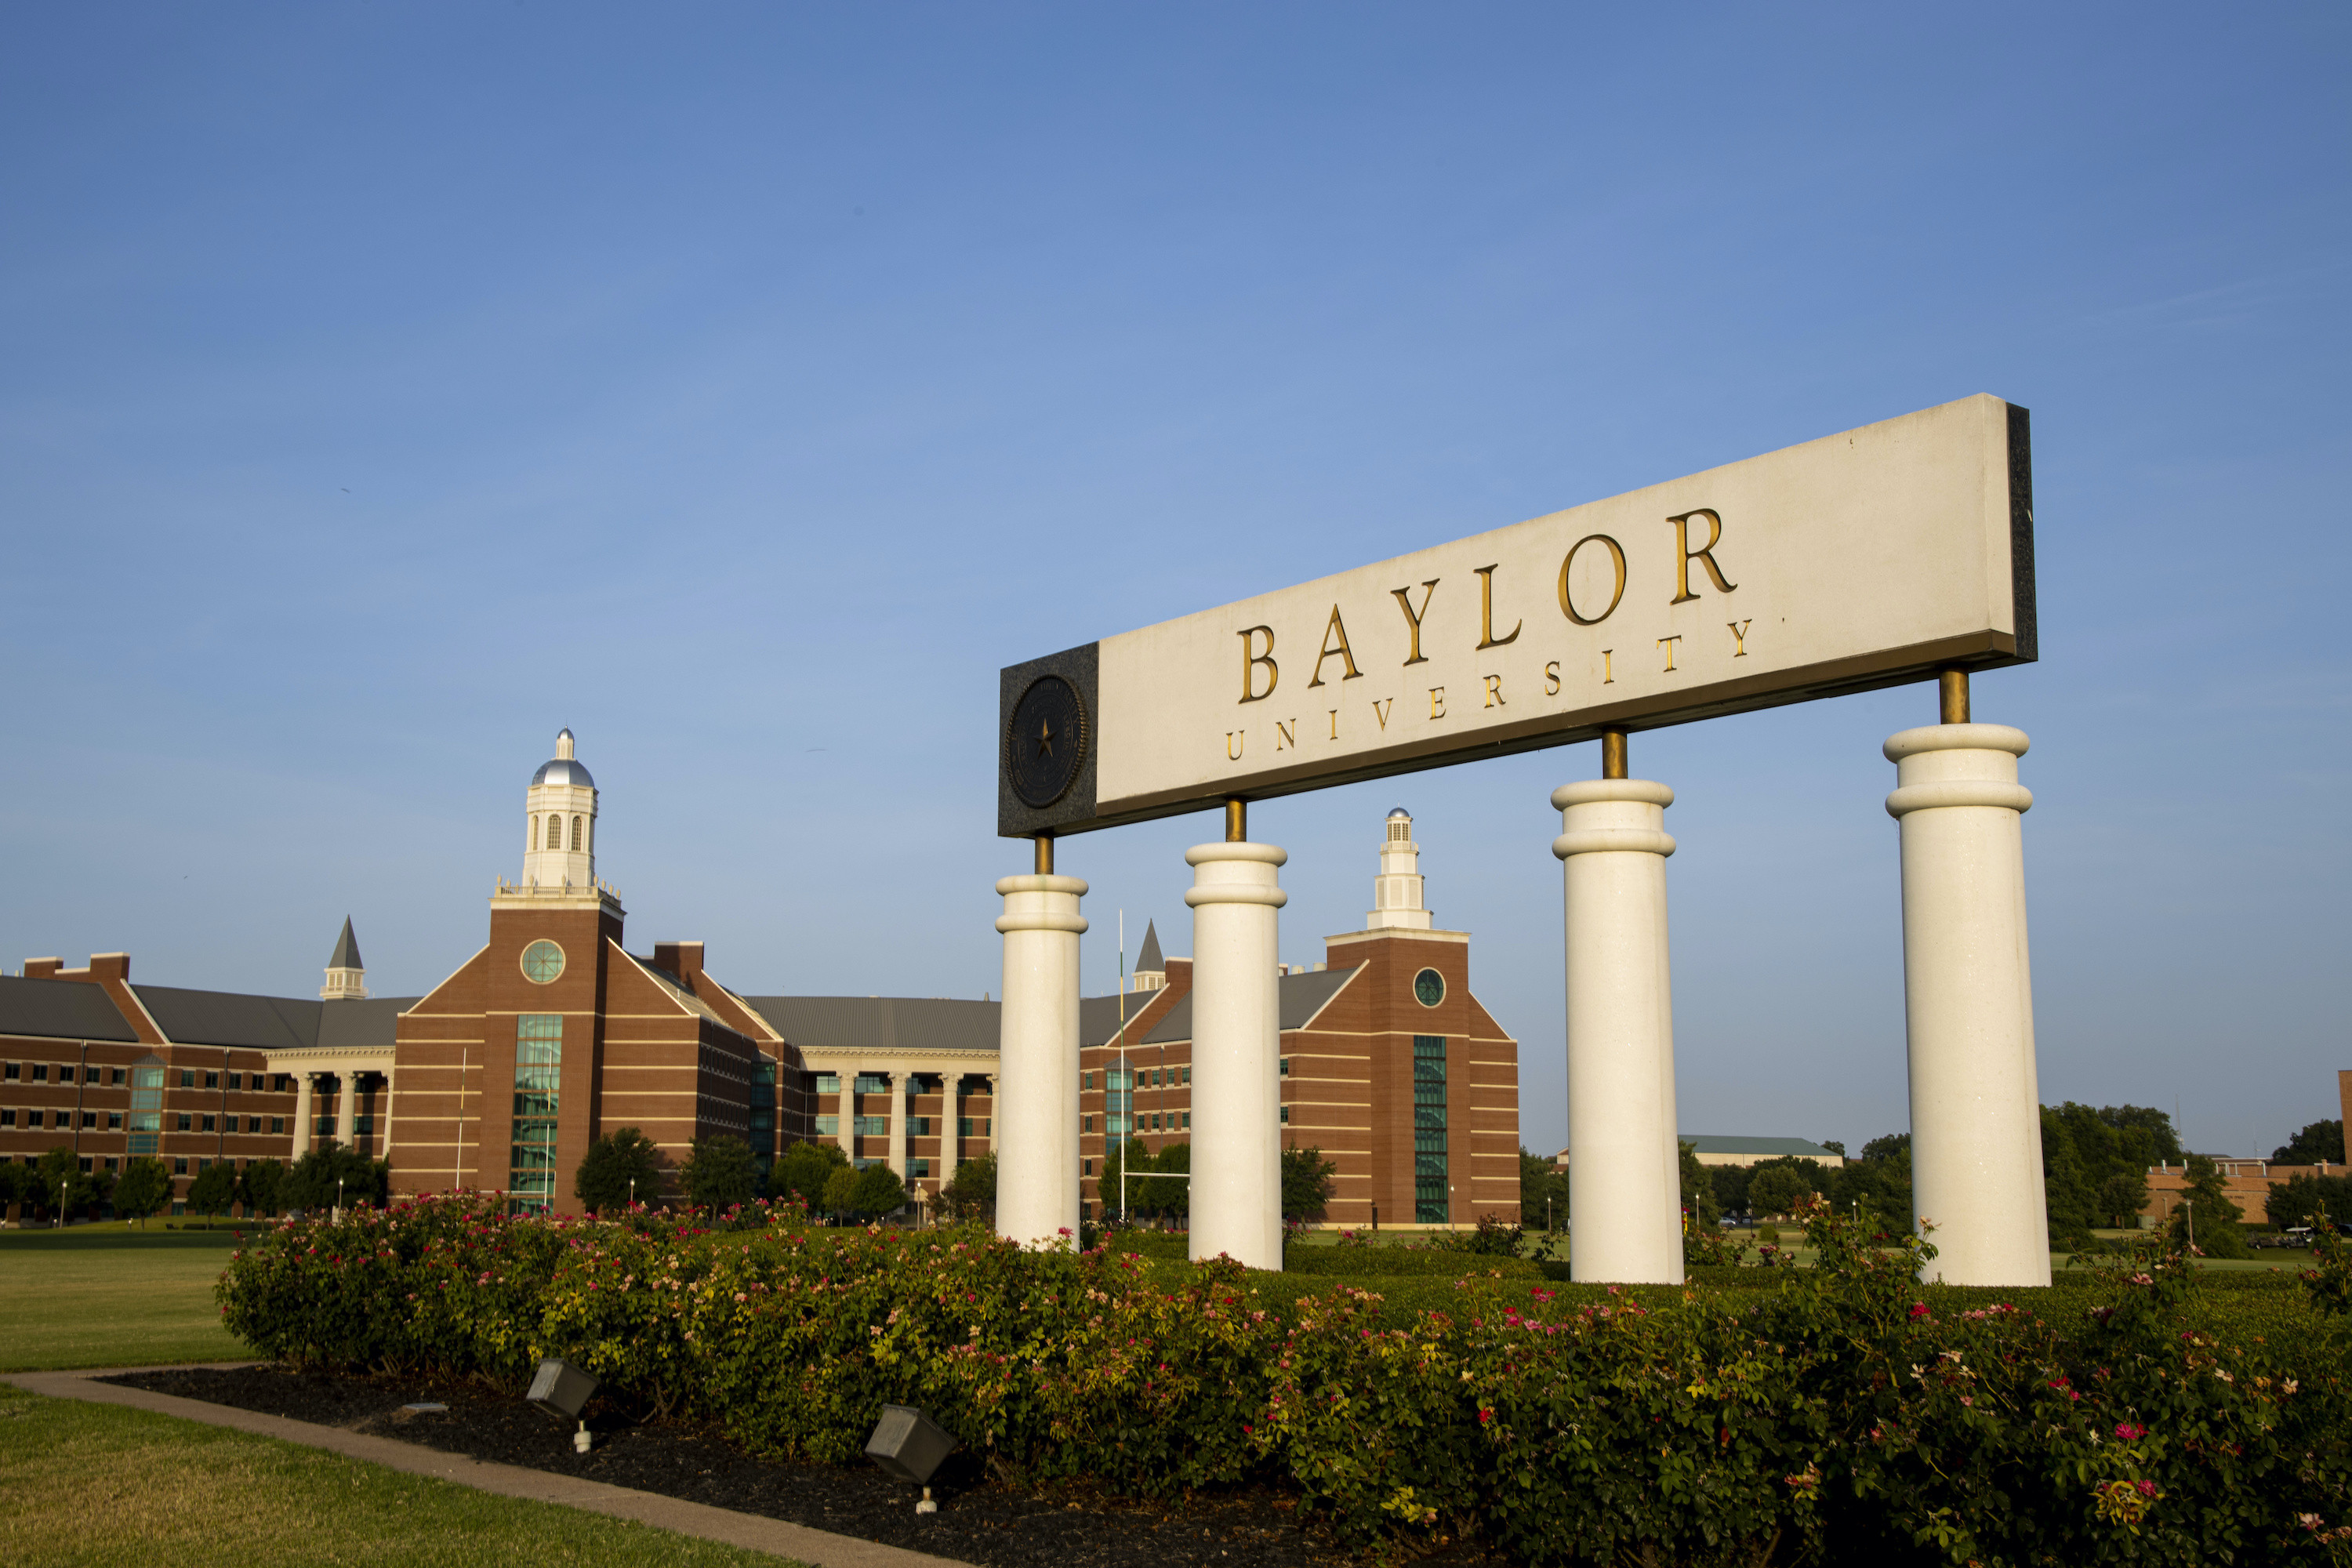 Baylor University Entrance Sign in front of school